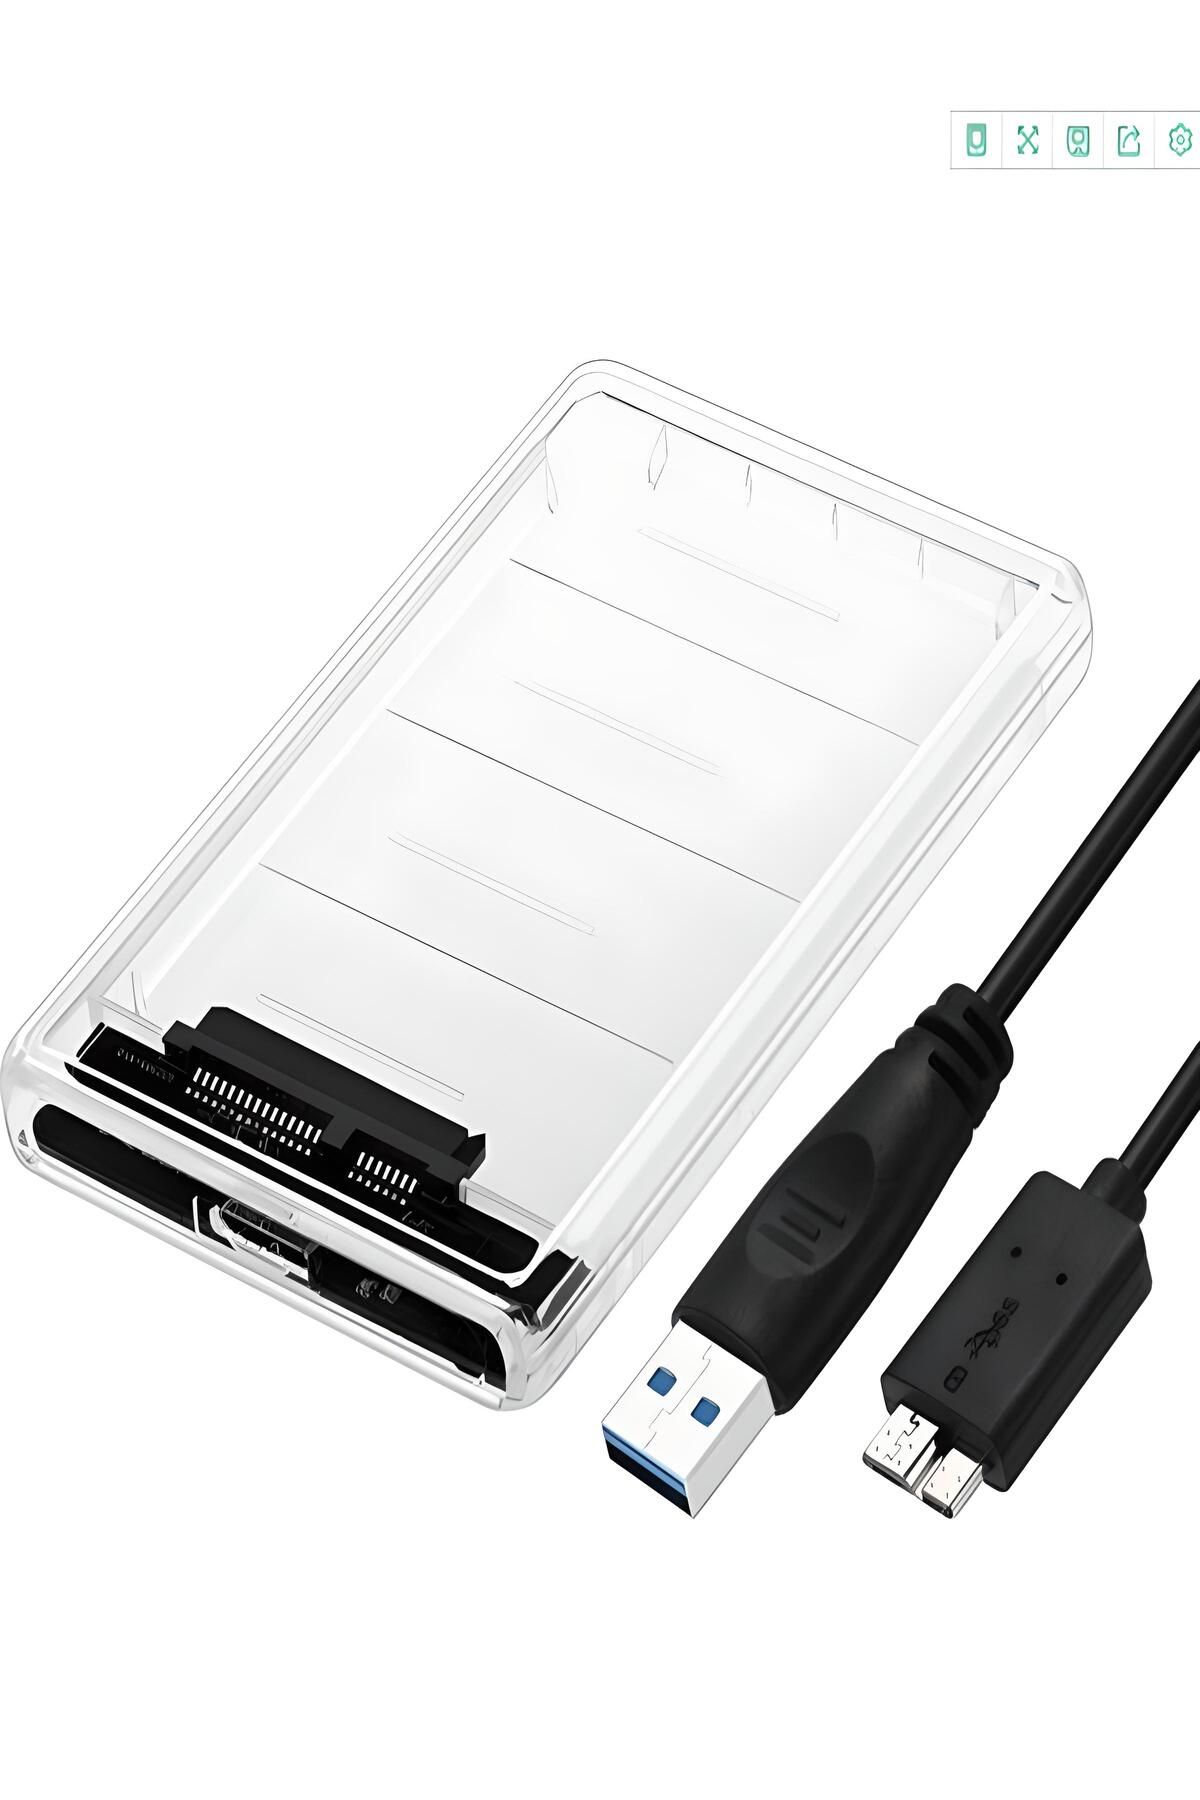 ulu 2,5 İNÇ Sata USB 3.0 Taşınabilir Harddisk -SSD Kutusu Şeffaf